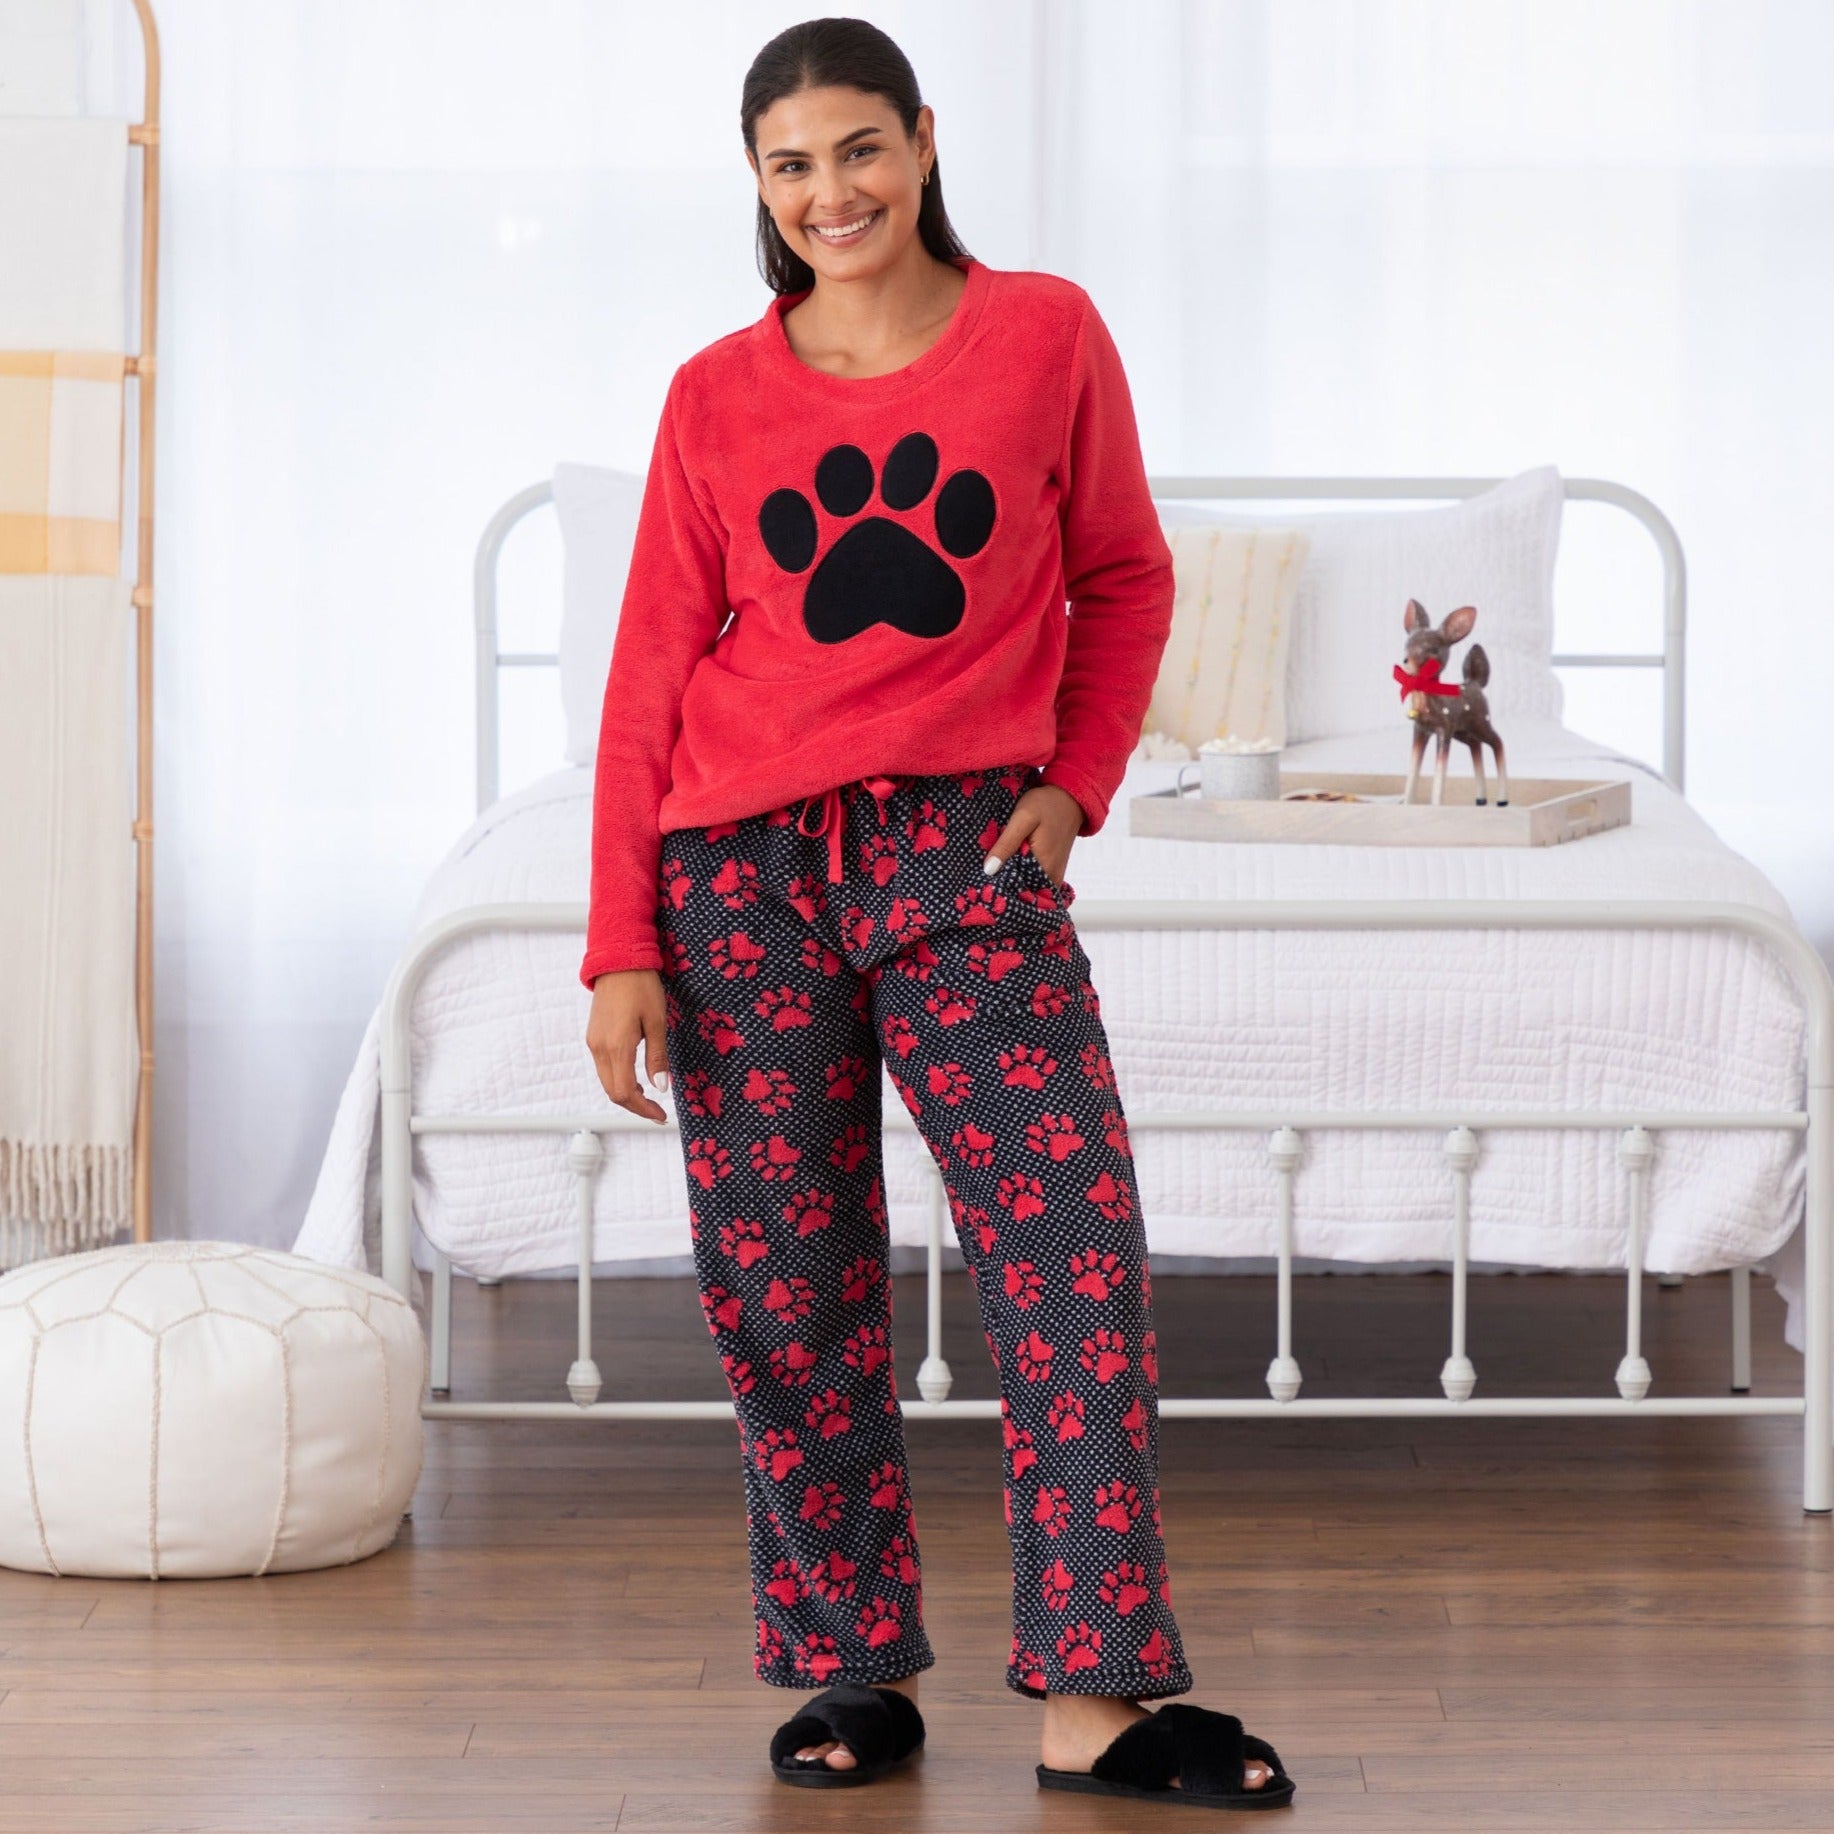 Polka Dot Paw Print Women's Fleece Pajama Set - Red - L